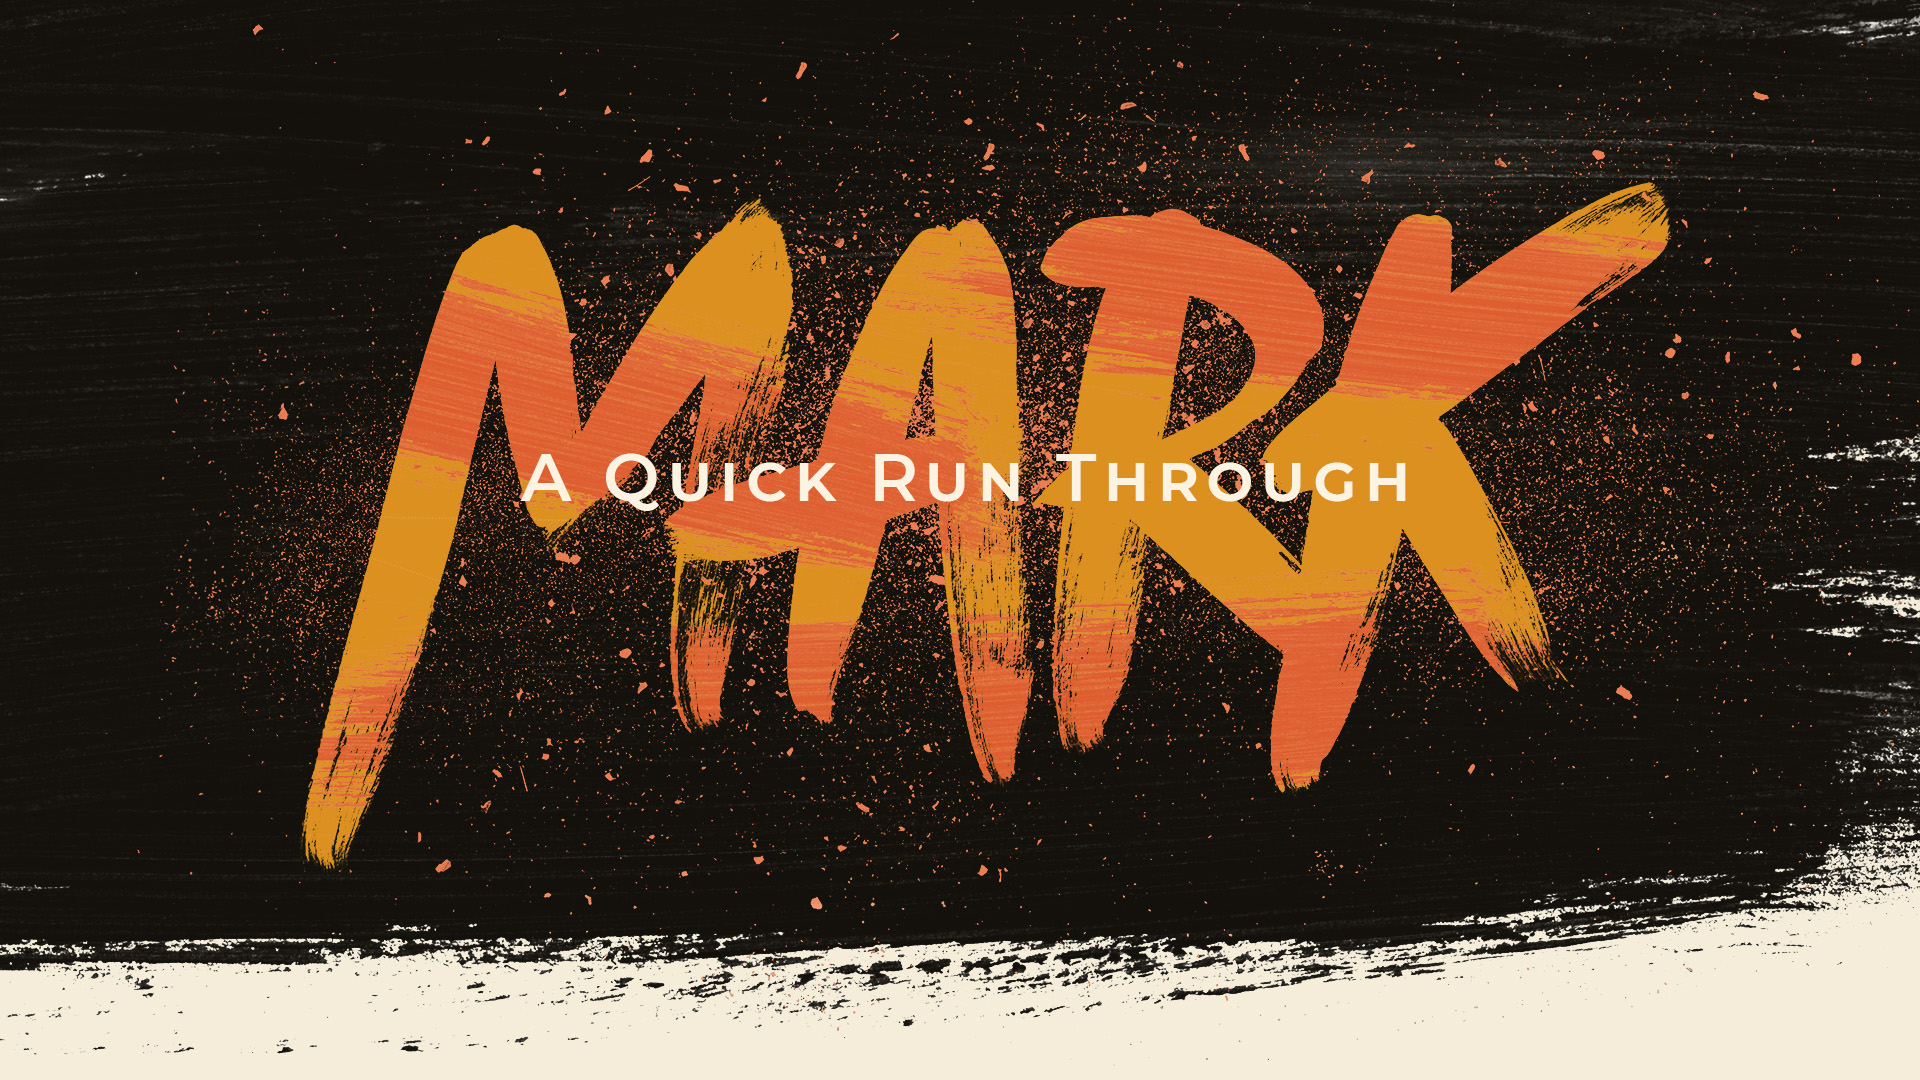 A Quick Run through Mark banner